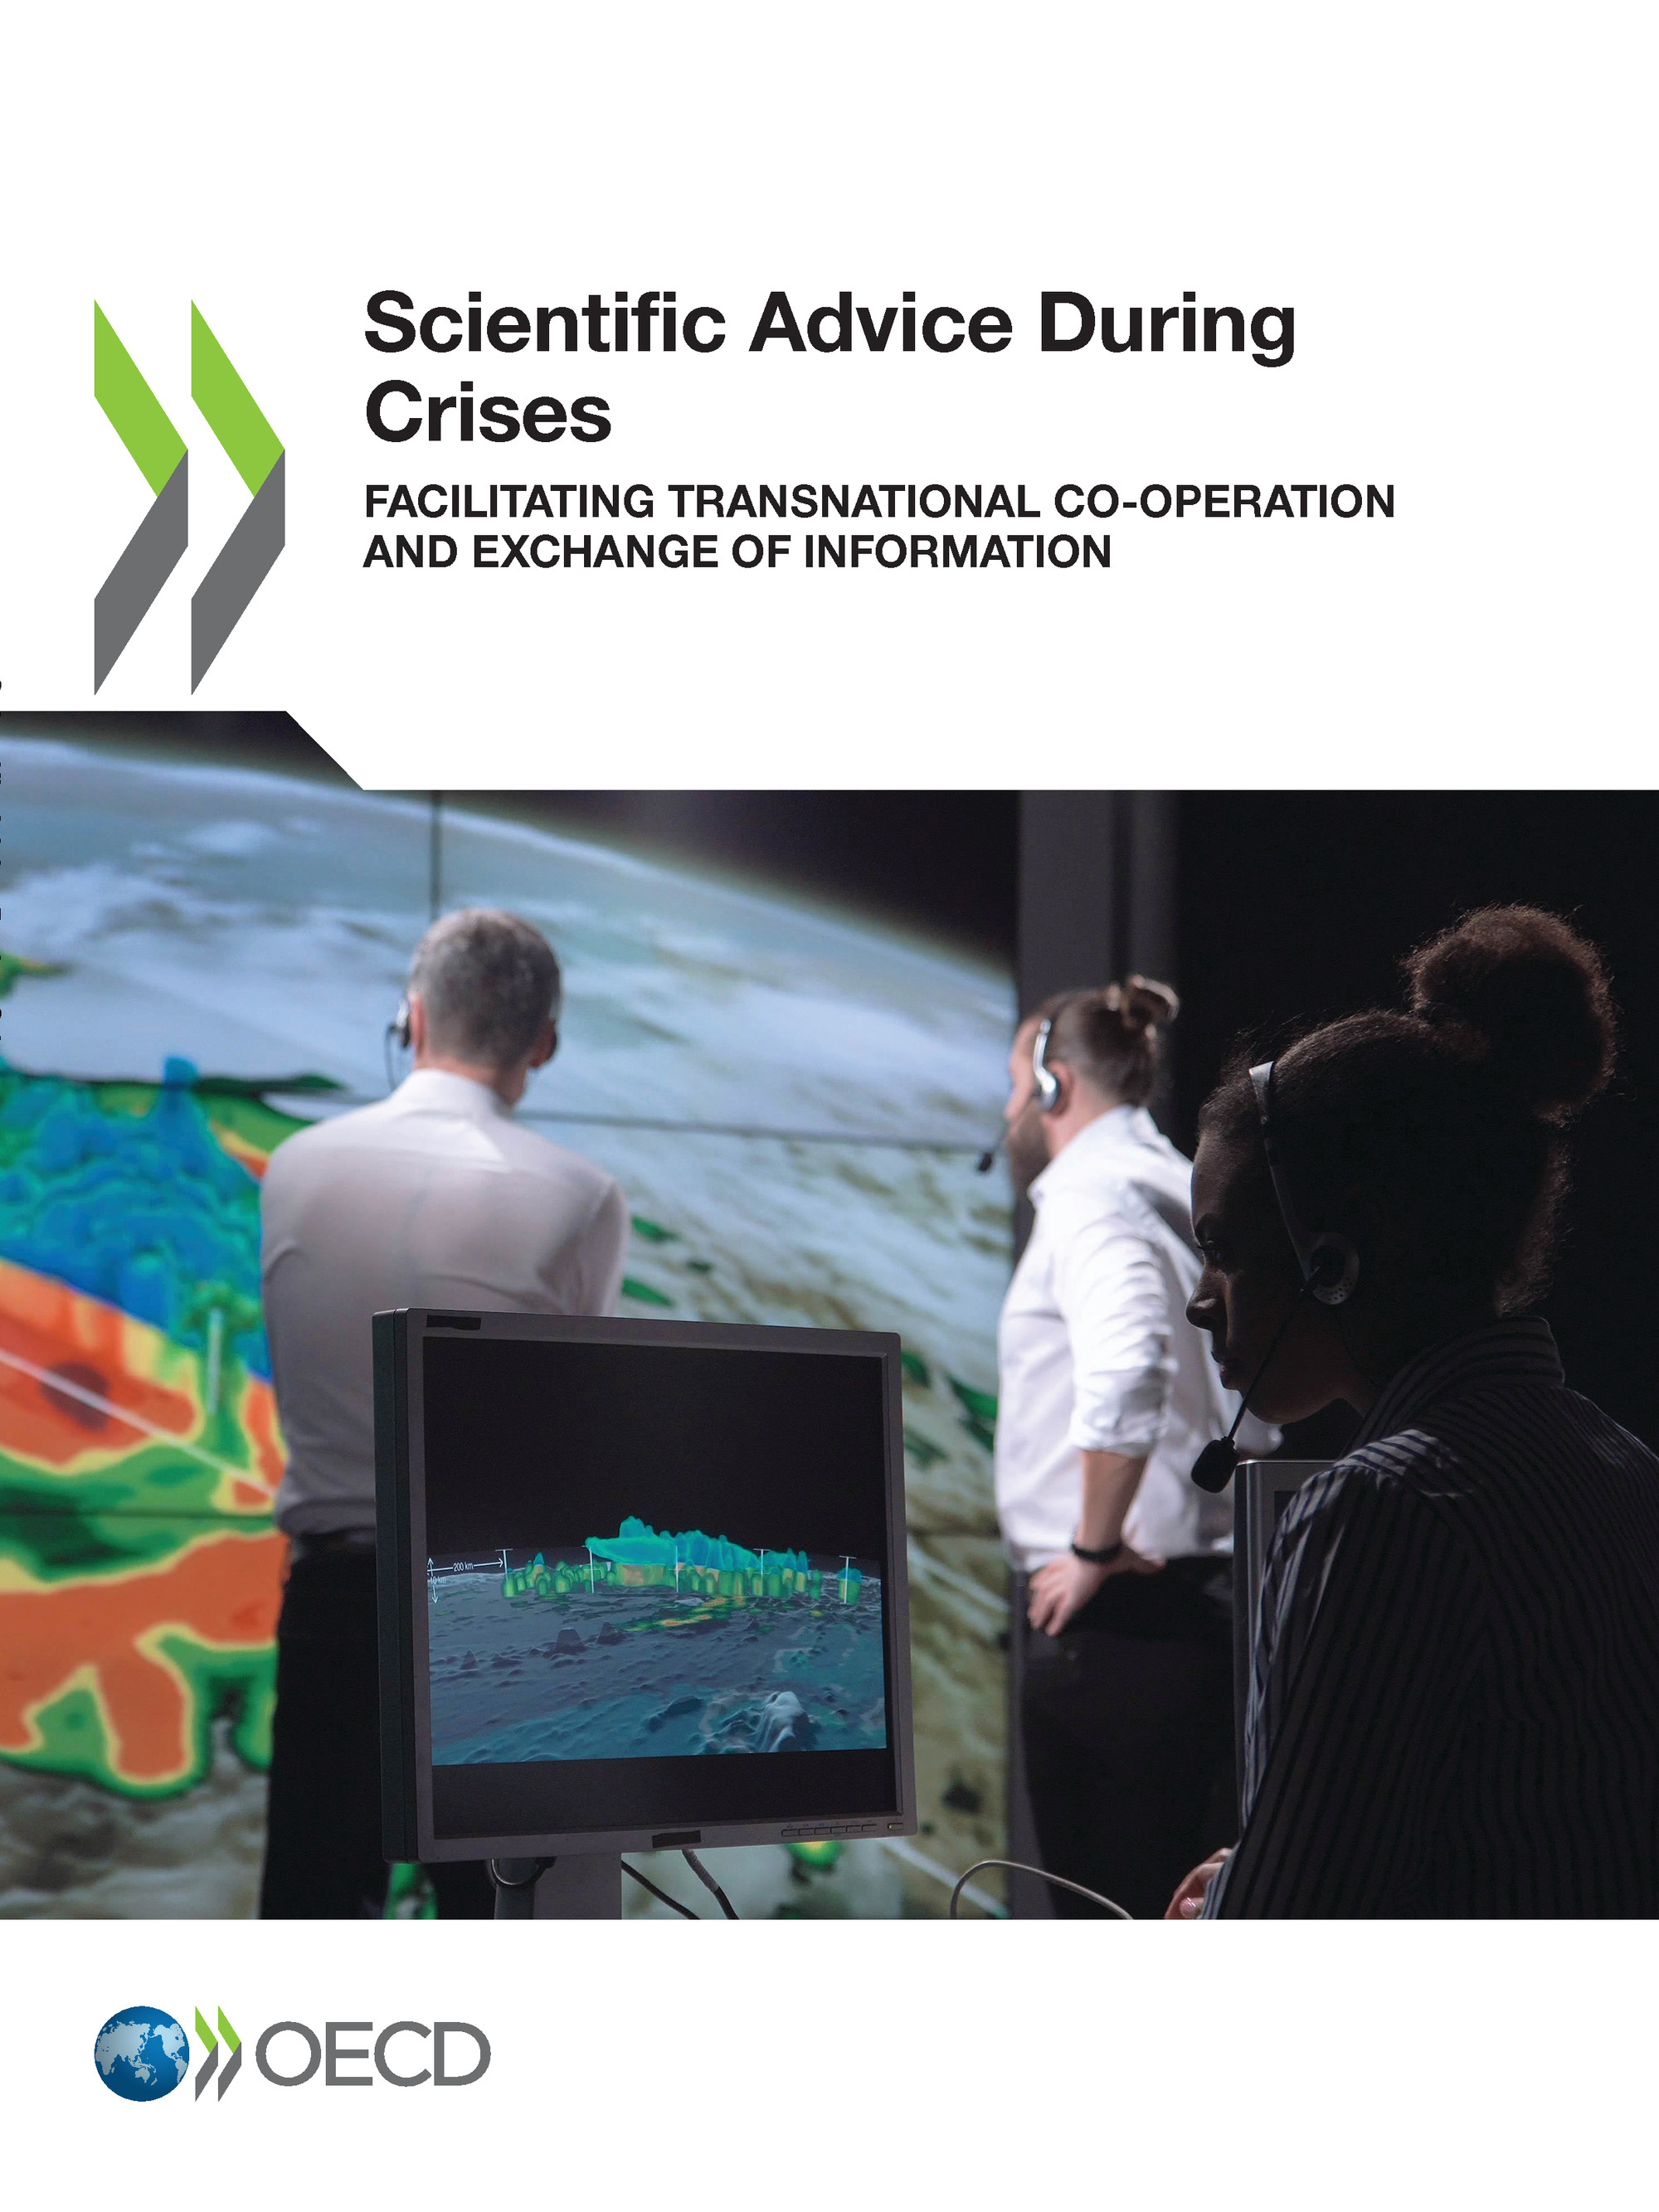 Scientific Advice During Crises -  Collectif - OCDE / OECD